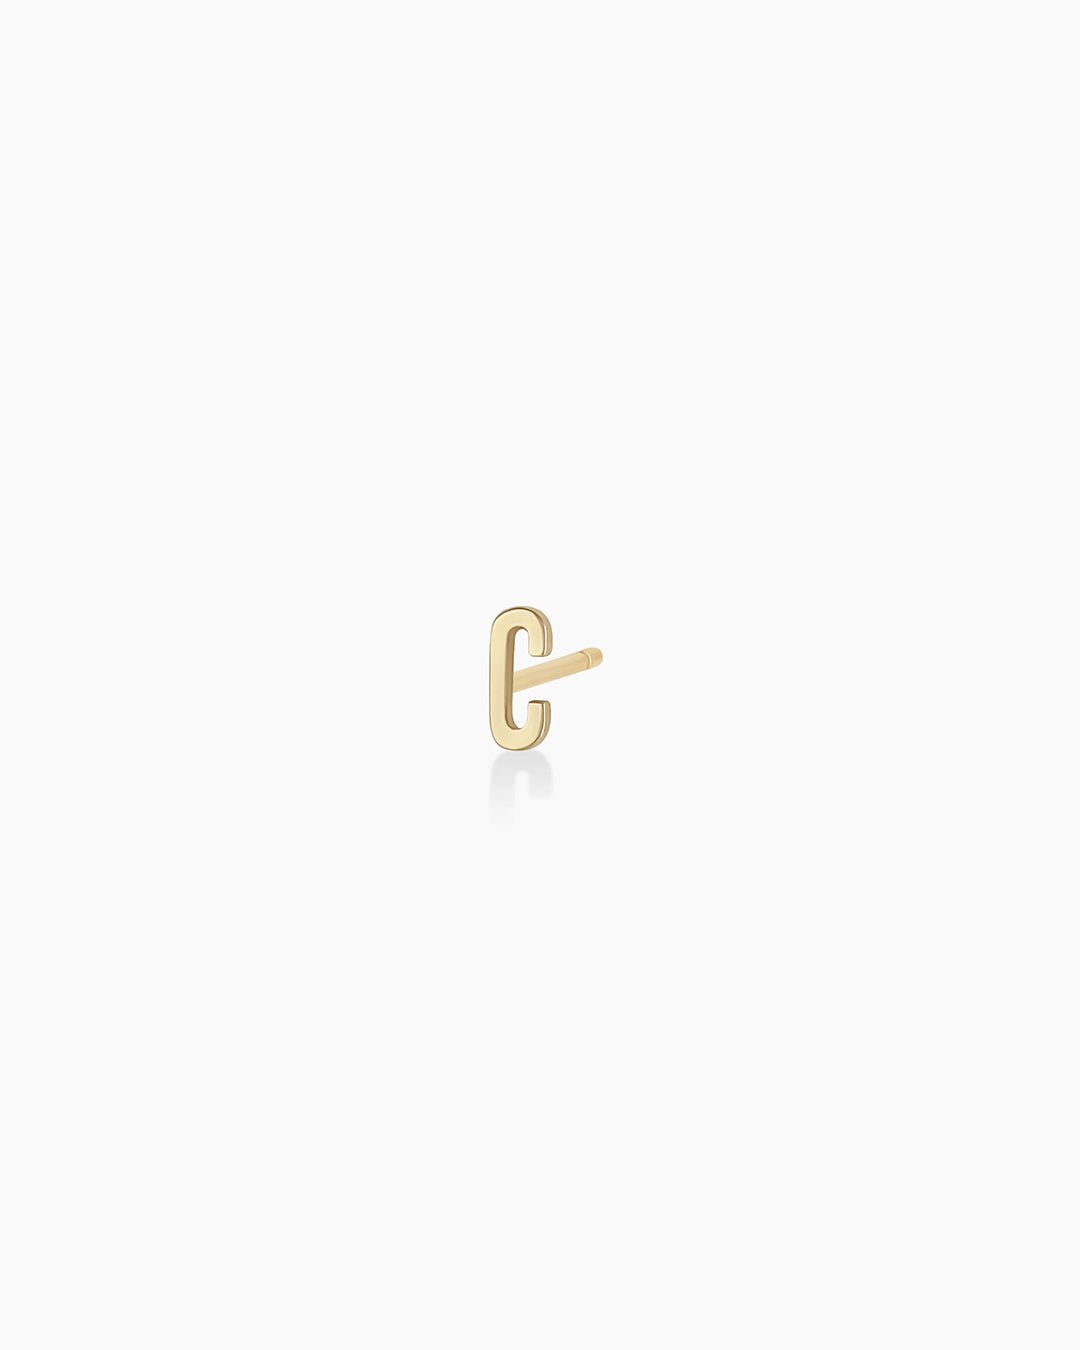 Woman wearing alphabet earring stud || option::14k Solid Gold, C, Single